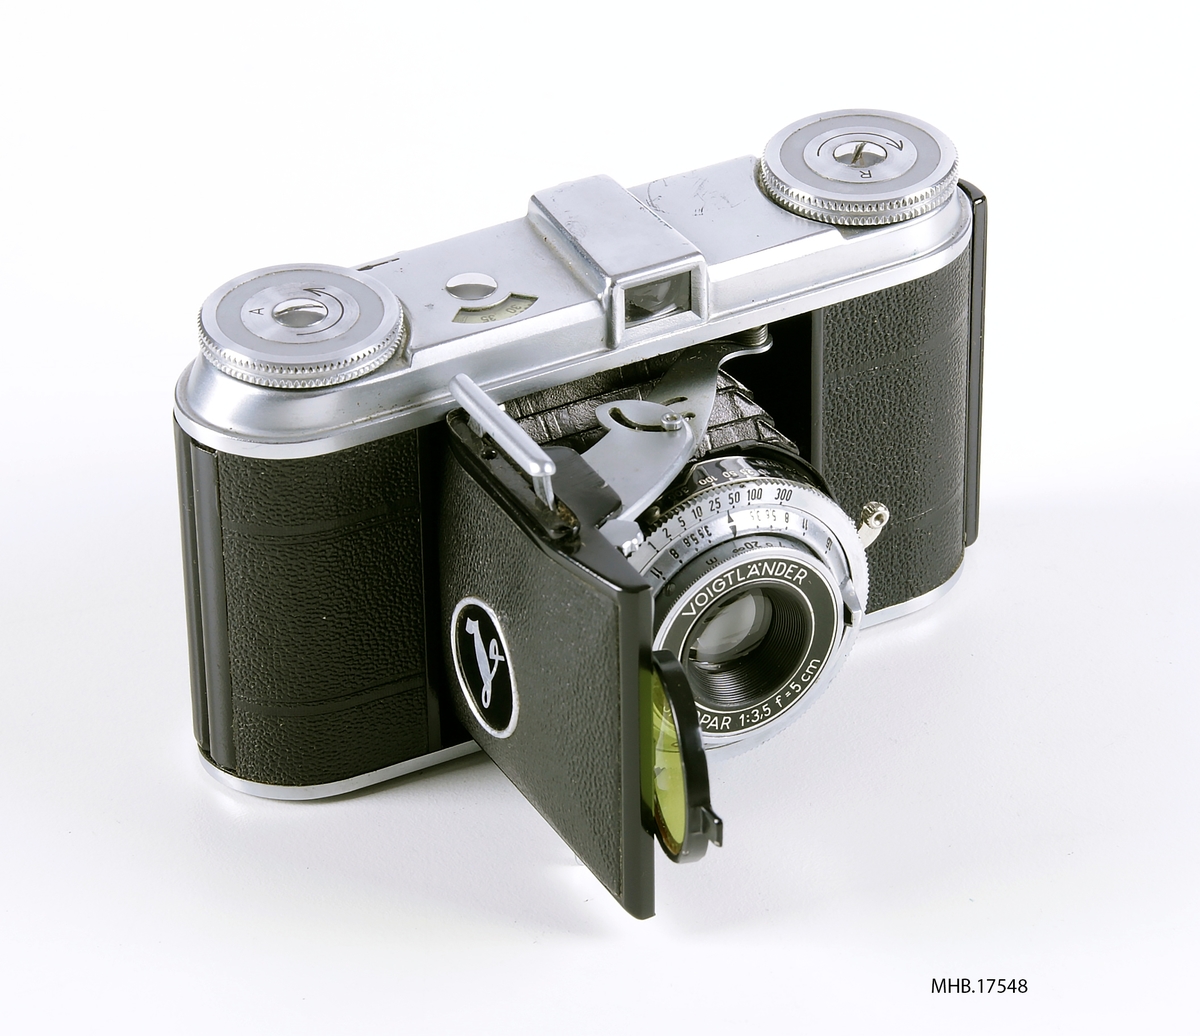 Folde fotoapparat Voigländer Vito (35mm filmrull) med Scopar 50mm f/3.5 linse og gul filter, avstandsinnstilling på objektivet 1-20m +inf, Compur lukker 1-1/300 sek og B. Produksjonssted Tyskland.